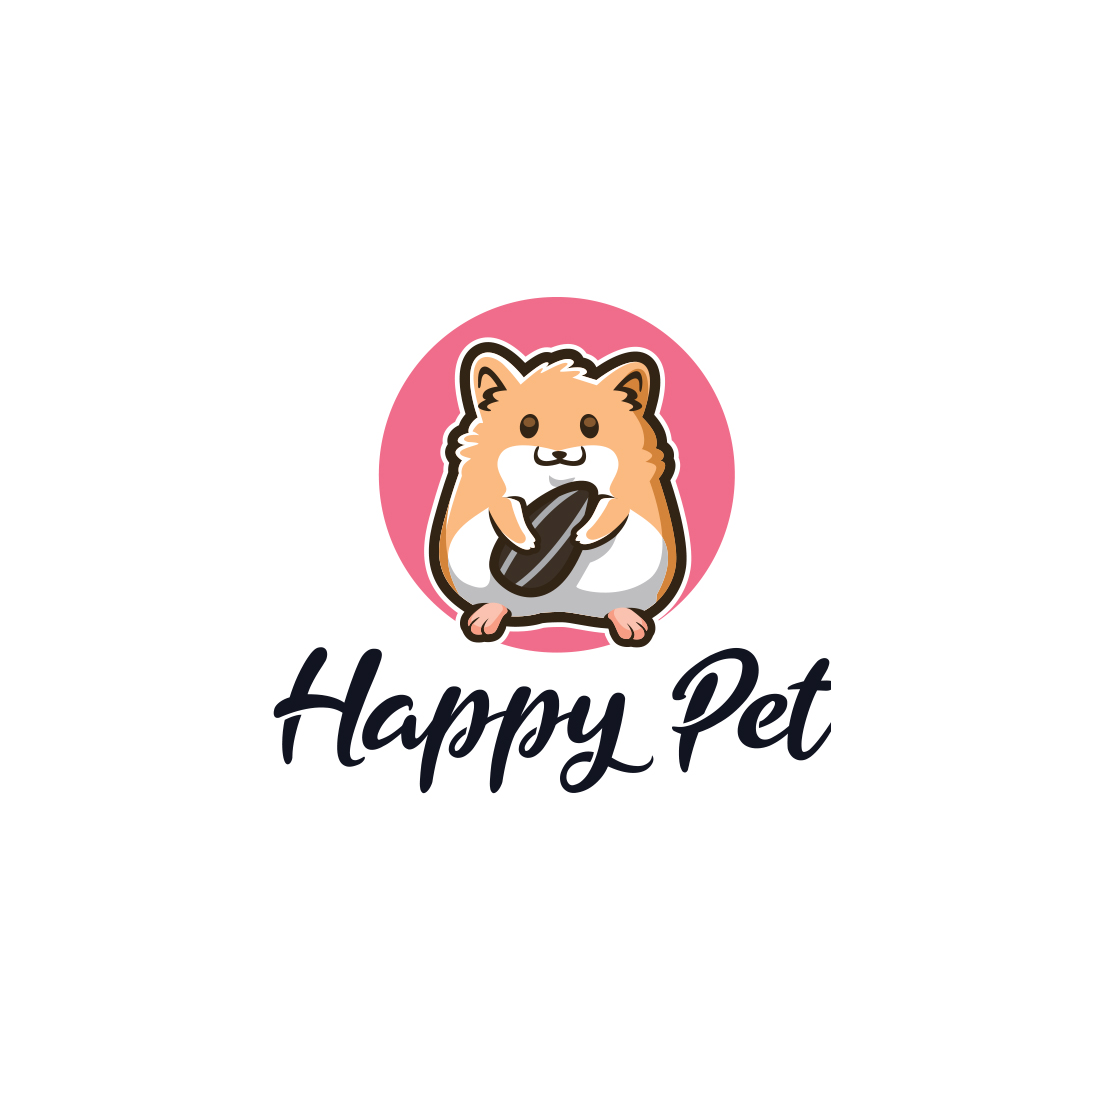 Cartoon Hamster Mascot Logo cover image.